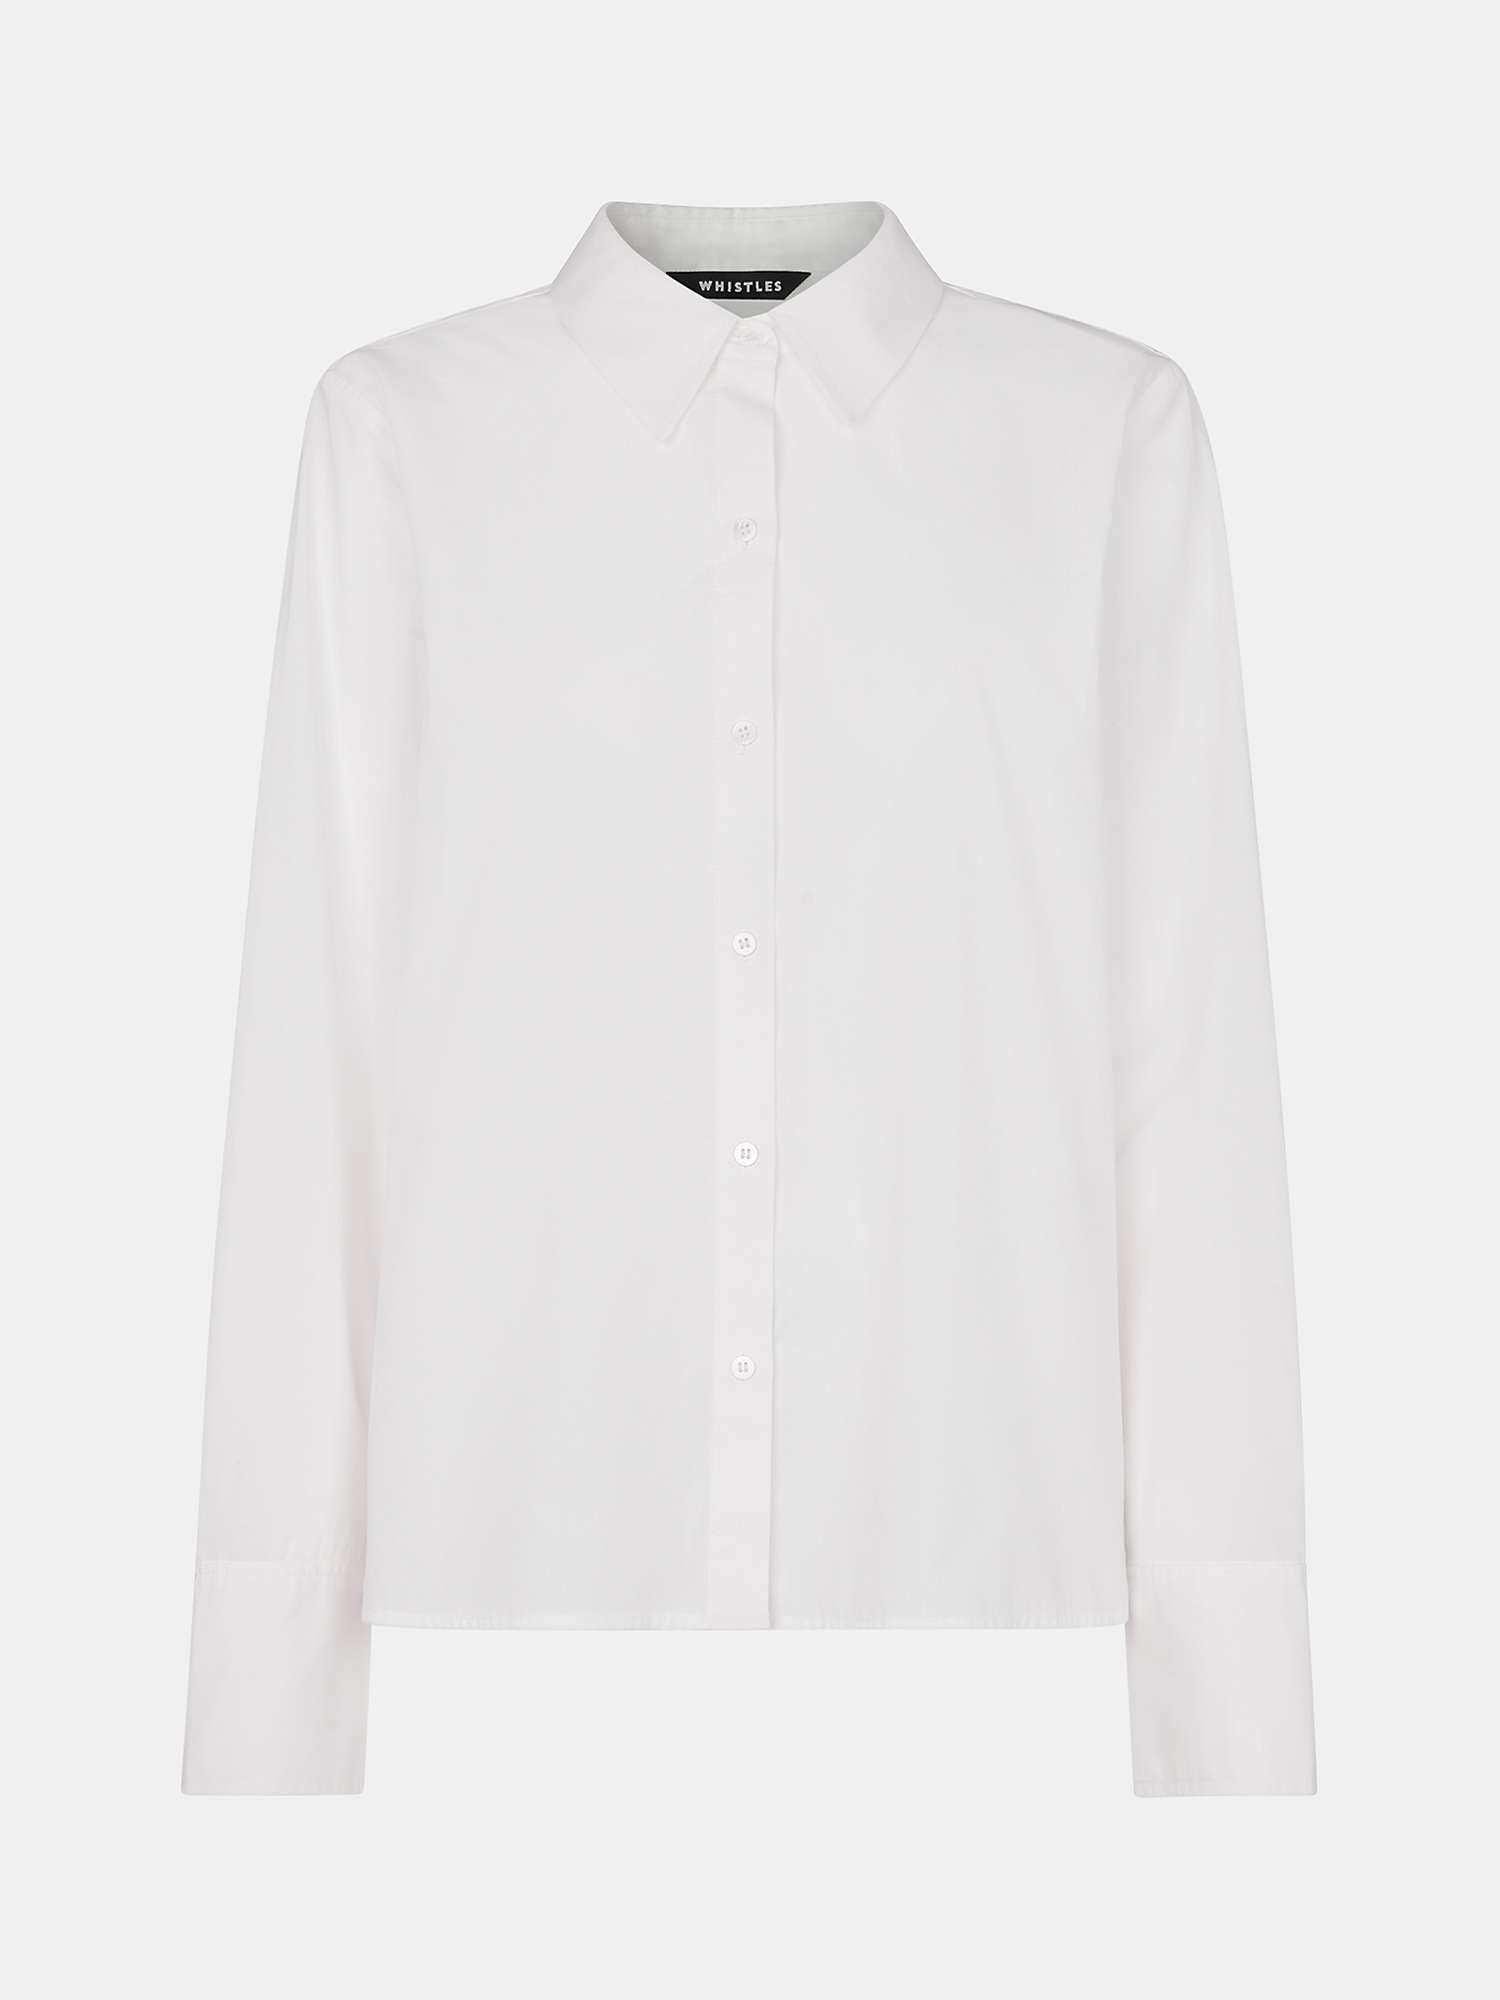 Whistles Boxy Cotton Shirt, White at John Lewis & Partners